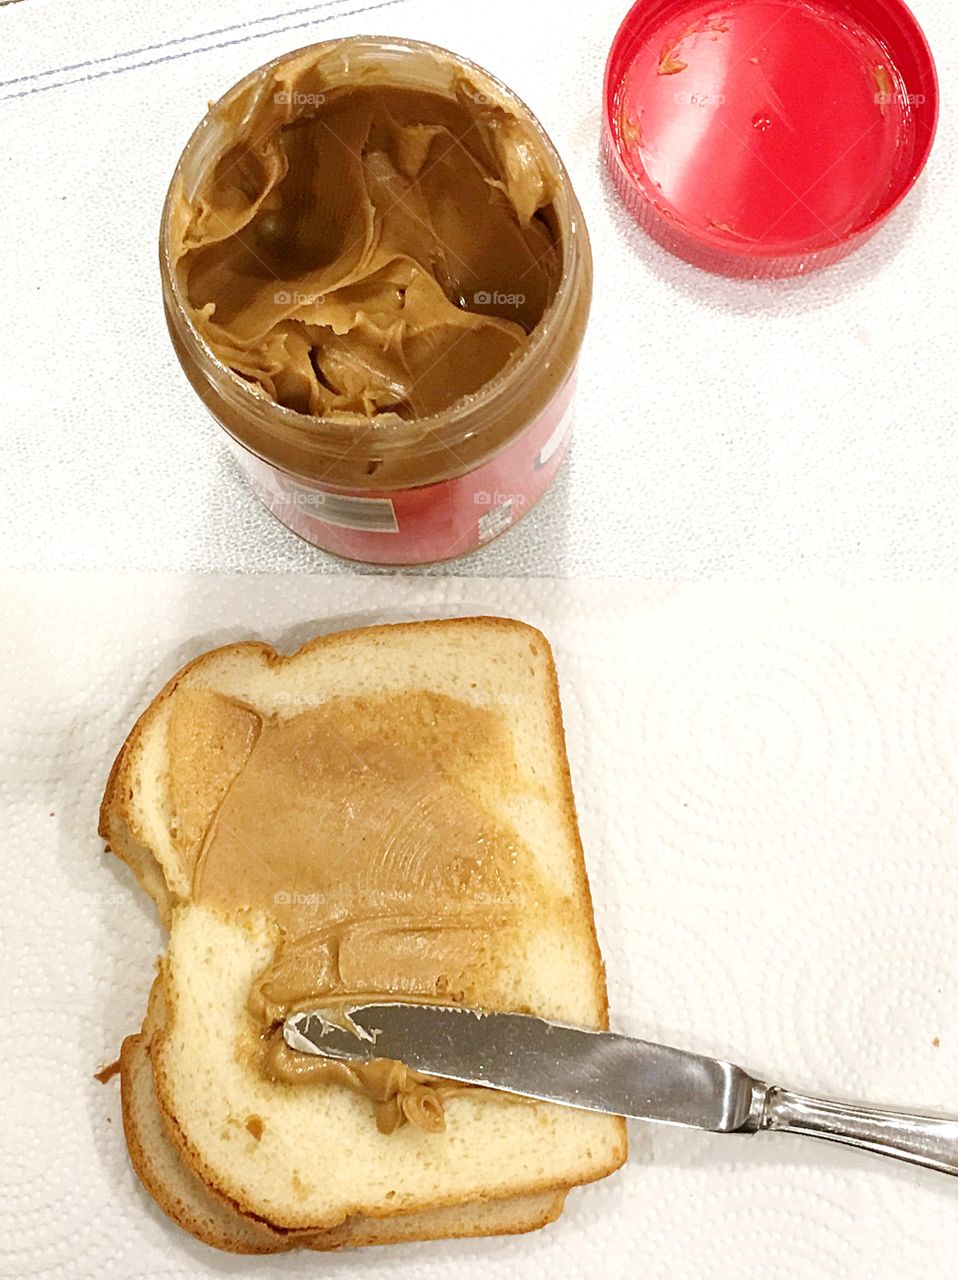 Peanut butter sandwiches 